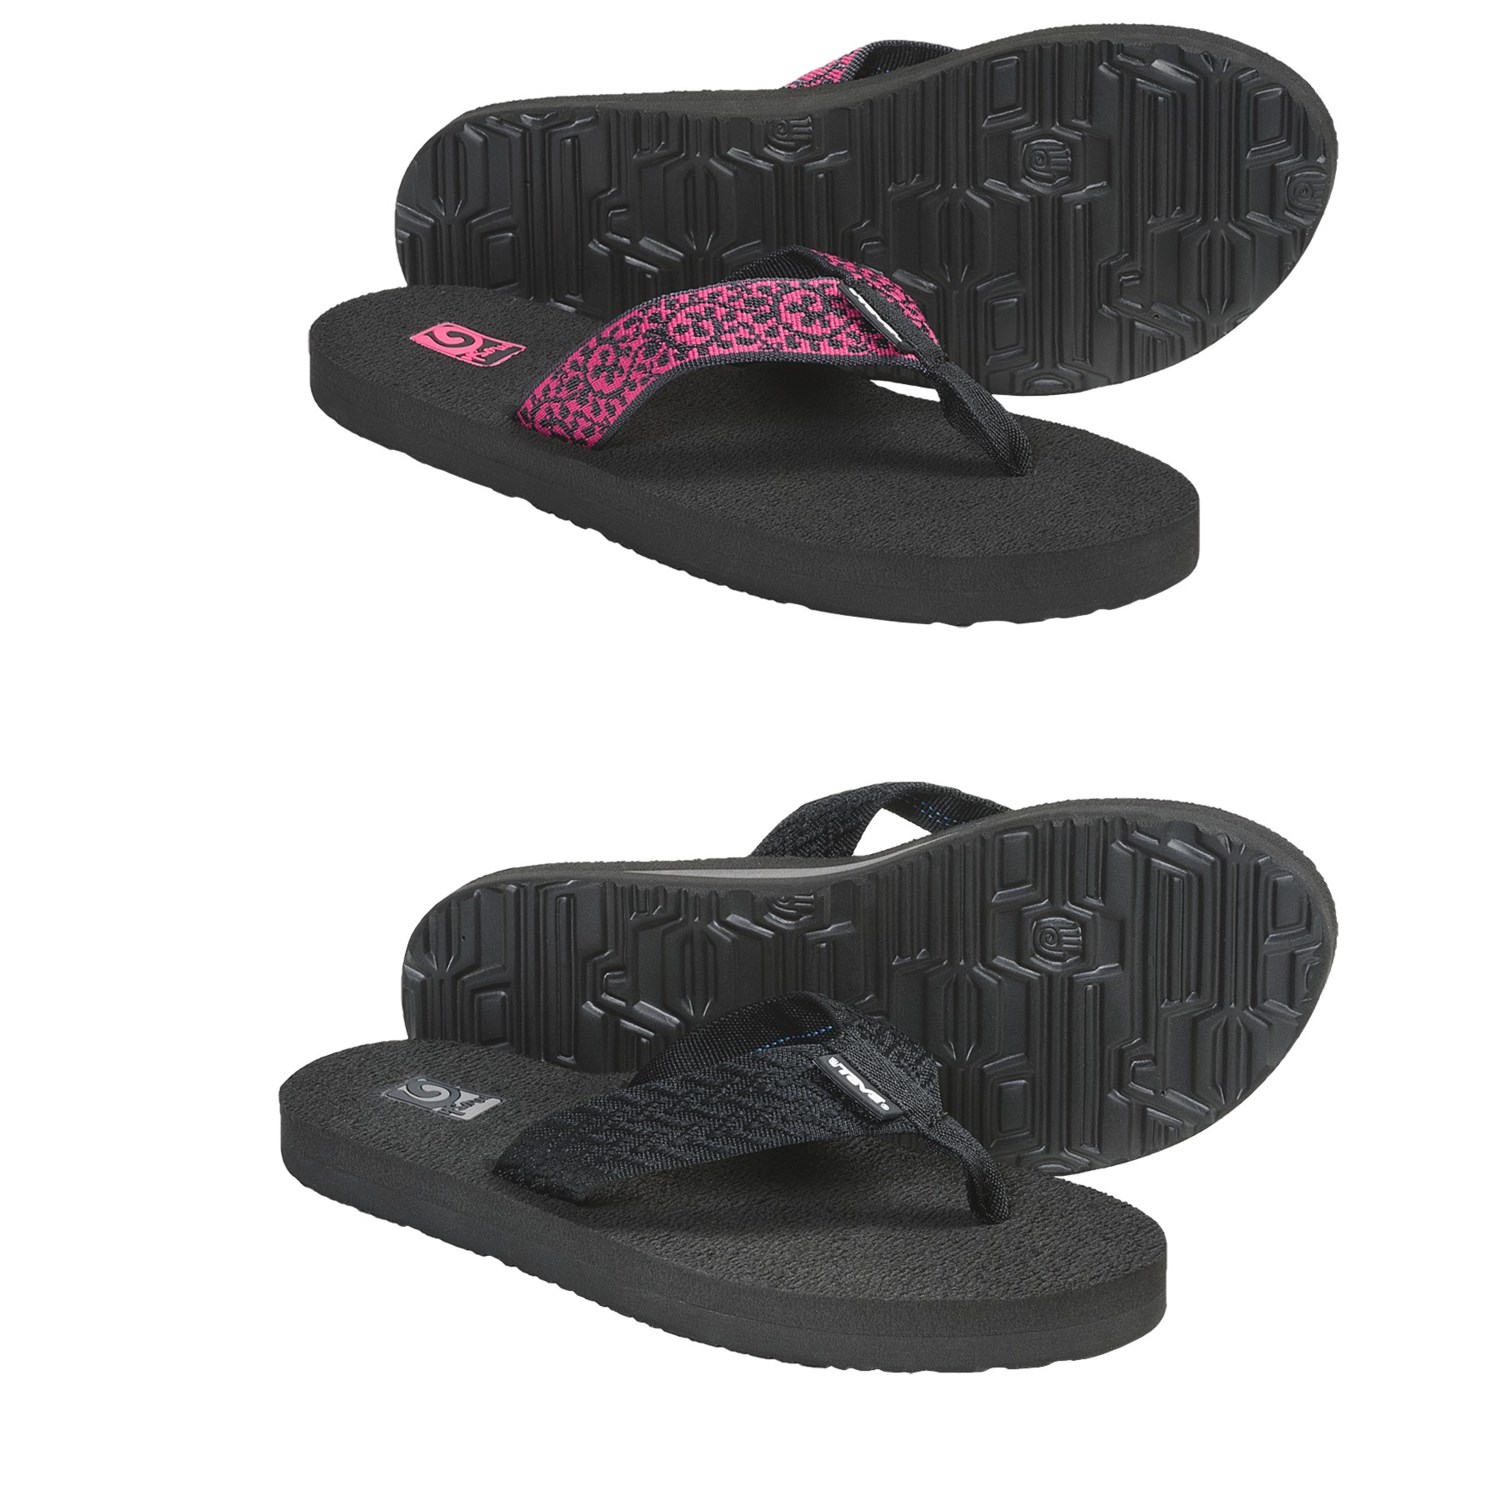 Teva MushÂ® II Thong Sandals - 2-Pack, Flip-Flops (For Women) in Tread ...